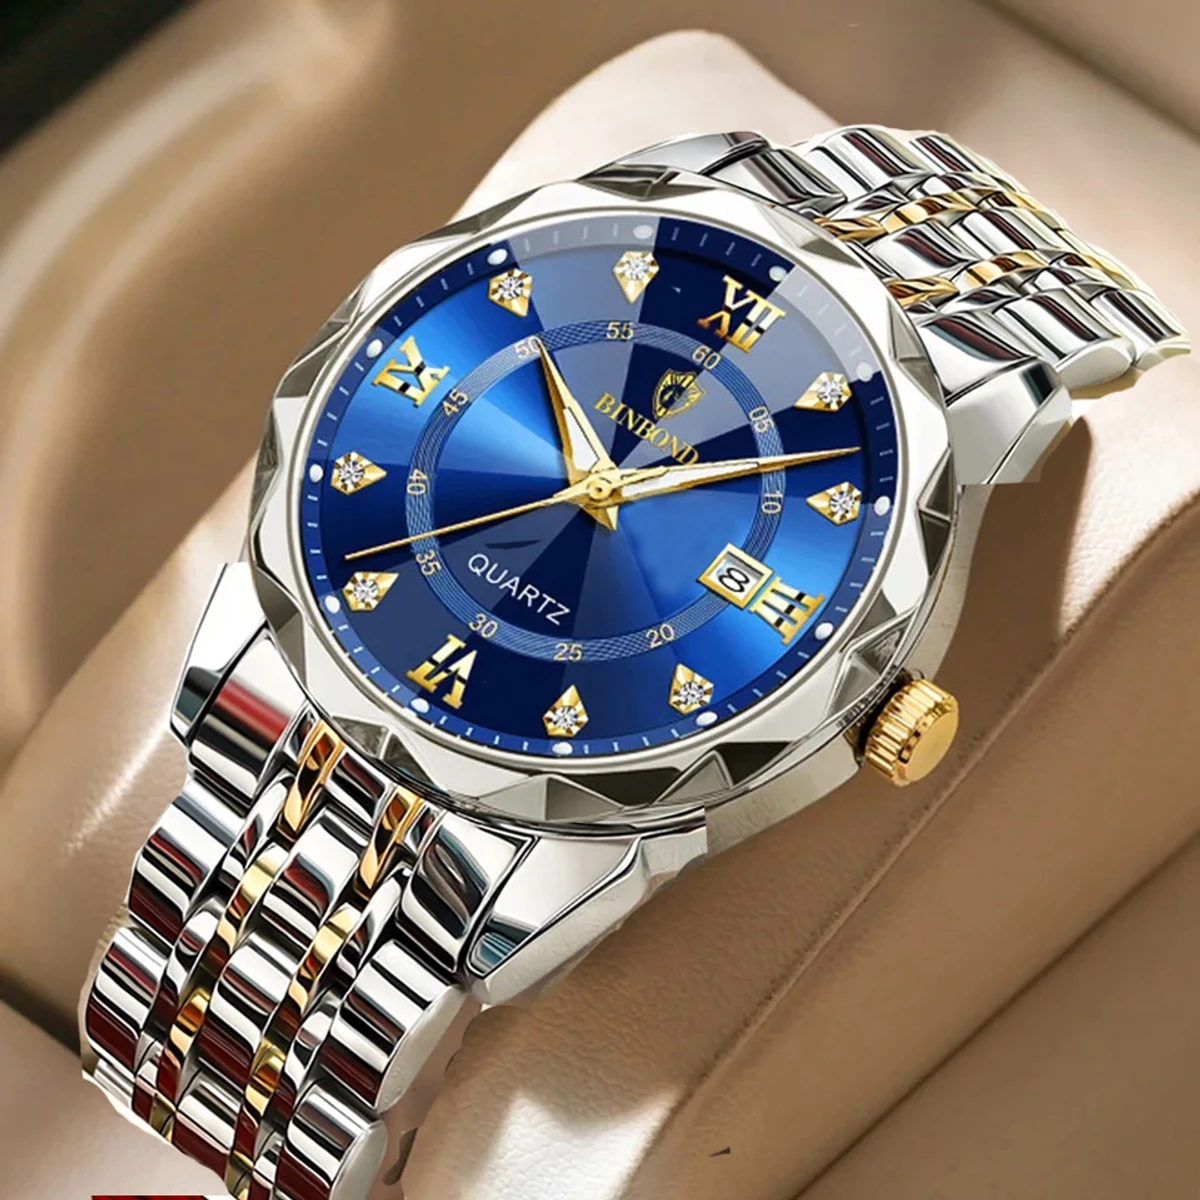 Luxury Binbond authentic men's watch waterproof night light calendar watch men's quartz watch ceiling glass- Blue